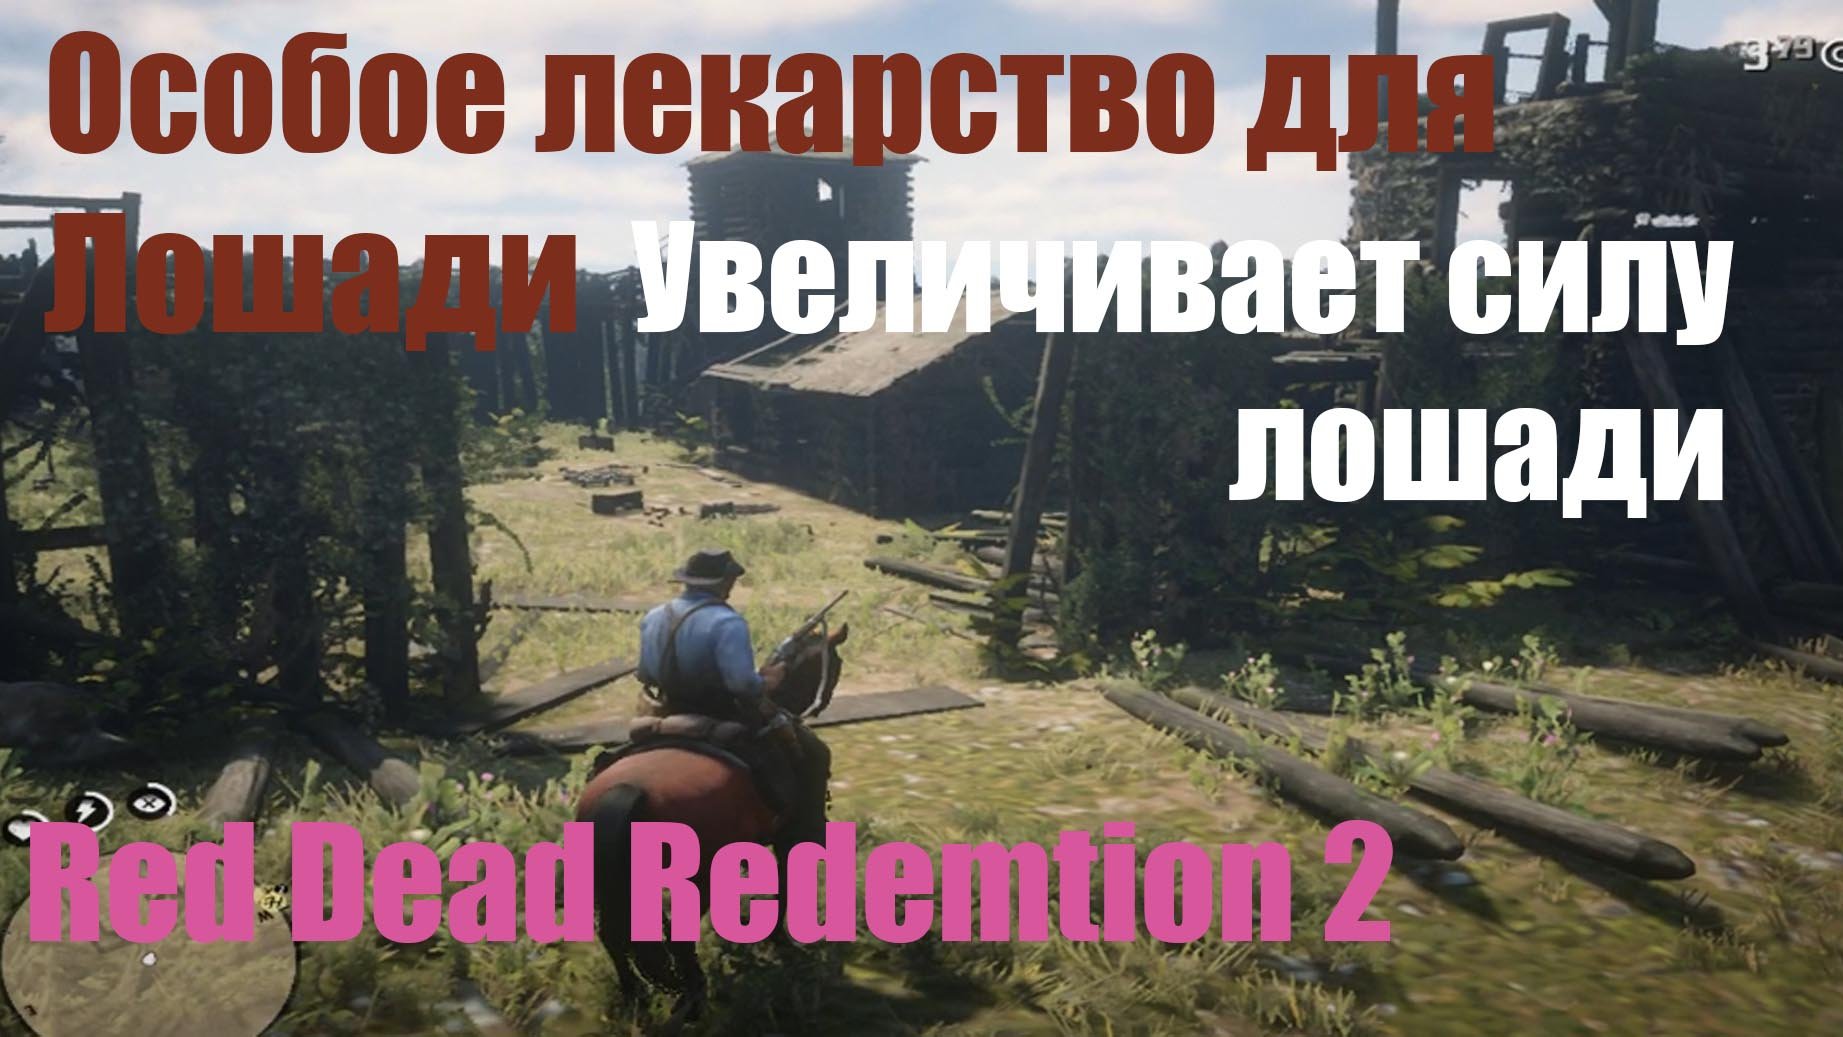 Red Dead Redemption 2 - Рецепт Особое лекарство для Лошади